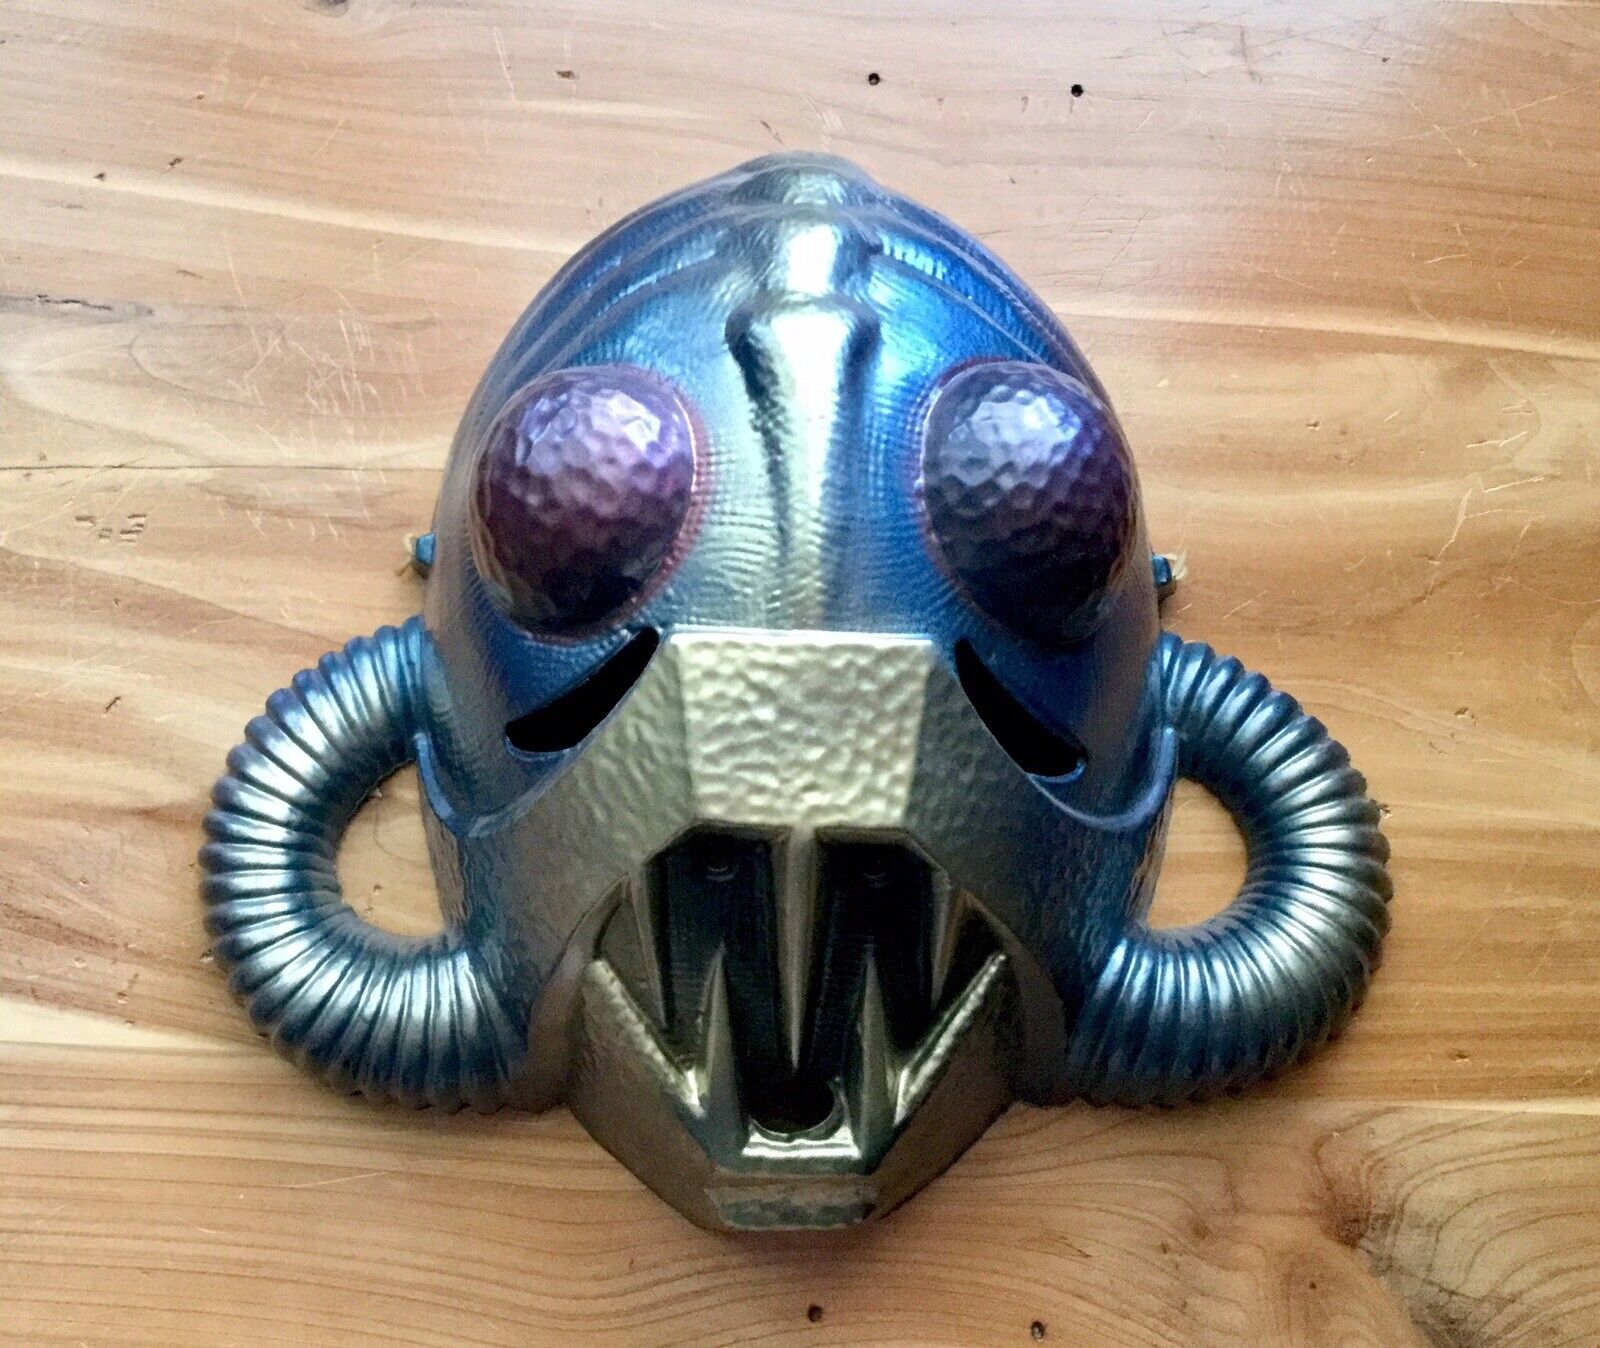 Vntg 1983 Unique Halloween Mask Cesar Sci Fi Robot Alien Monster Insect Bug